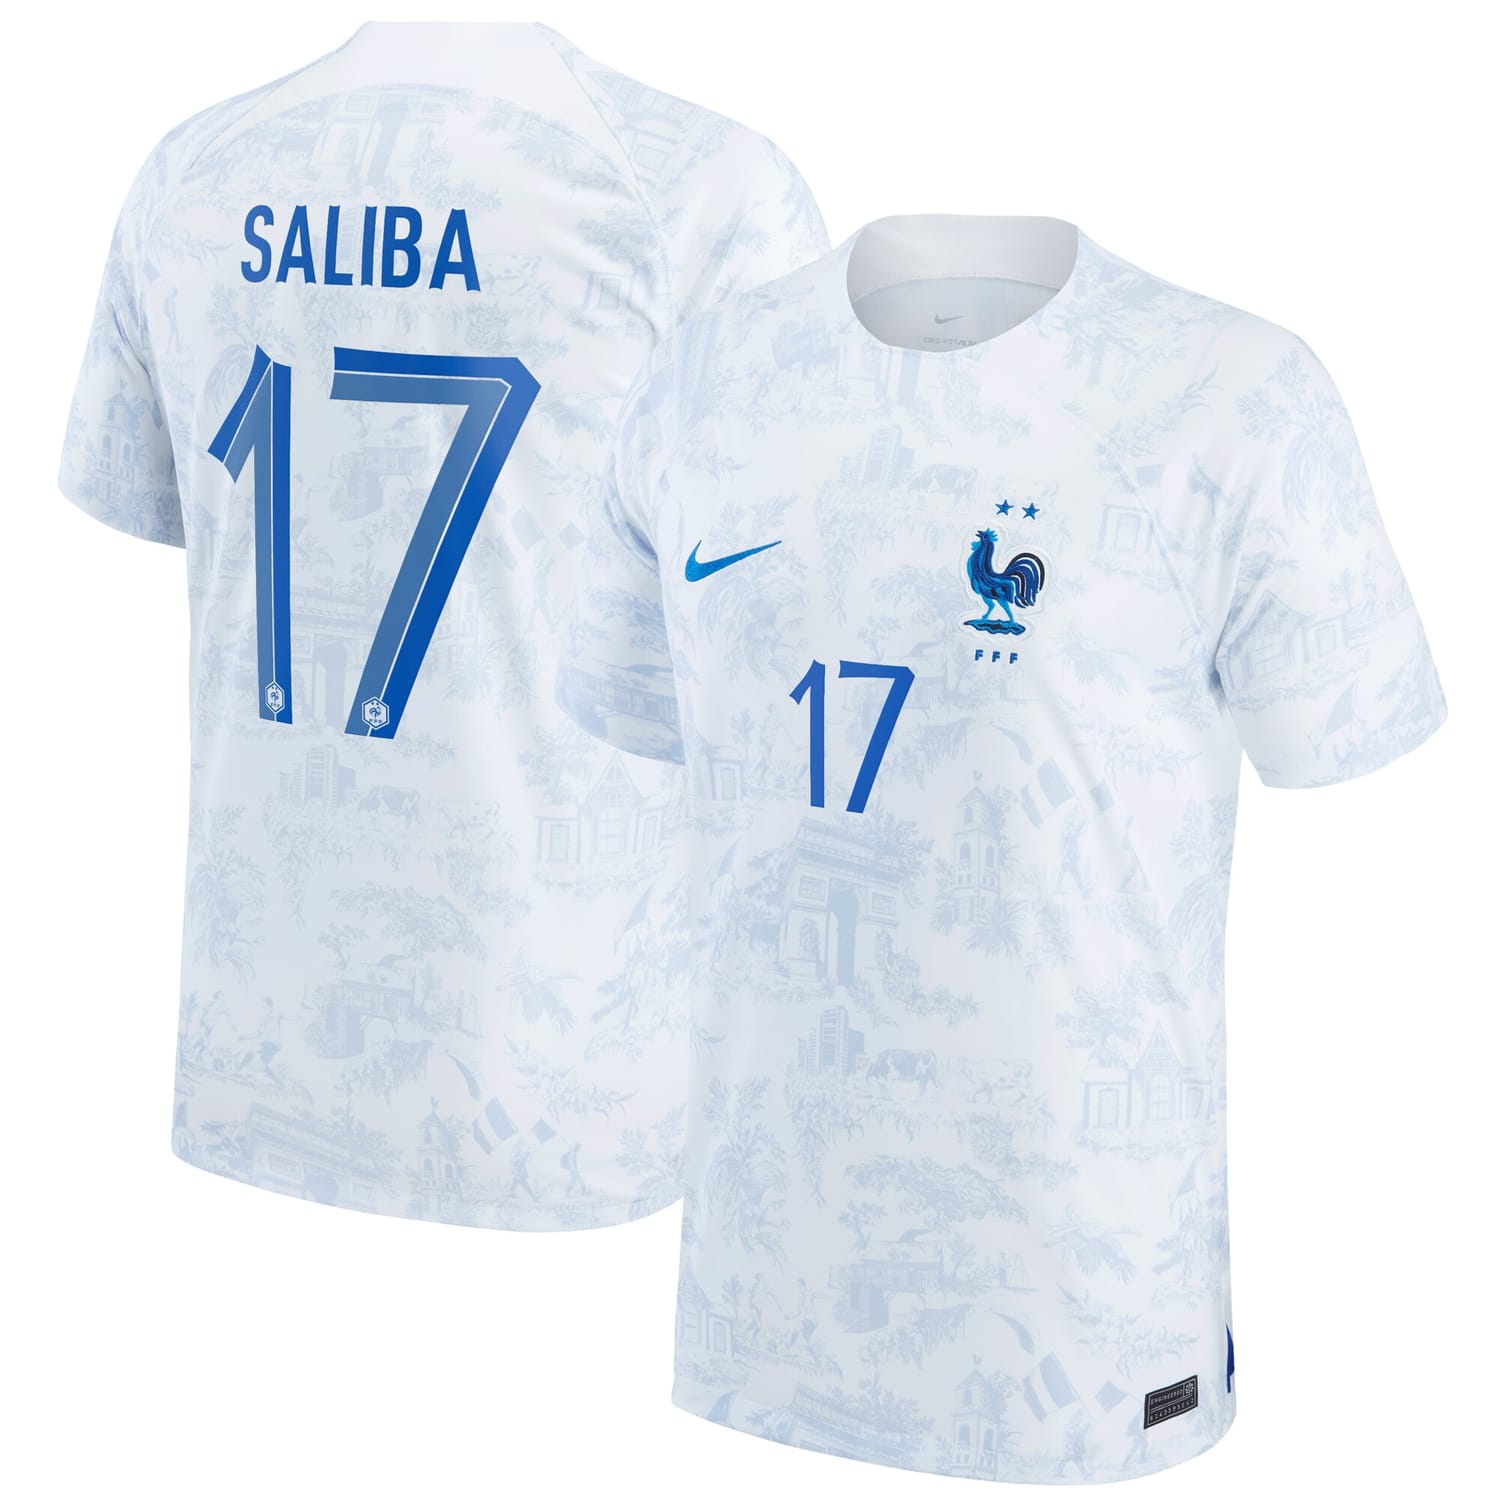 France National Team Away Jersey Shirt 2022 player William Saliba 17 printing for Men